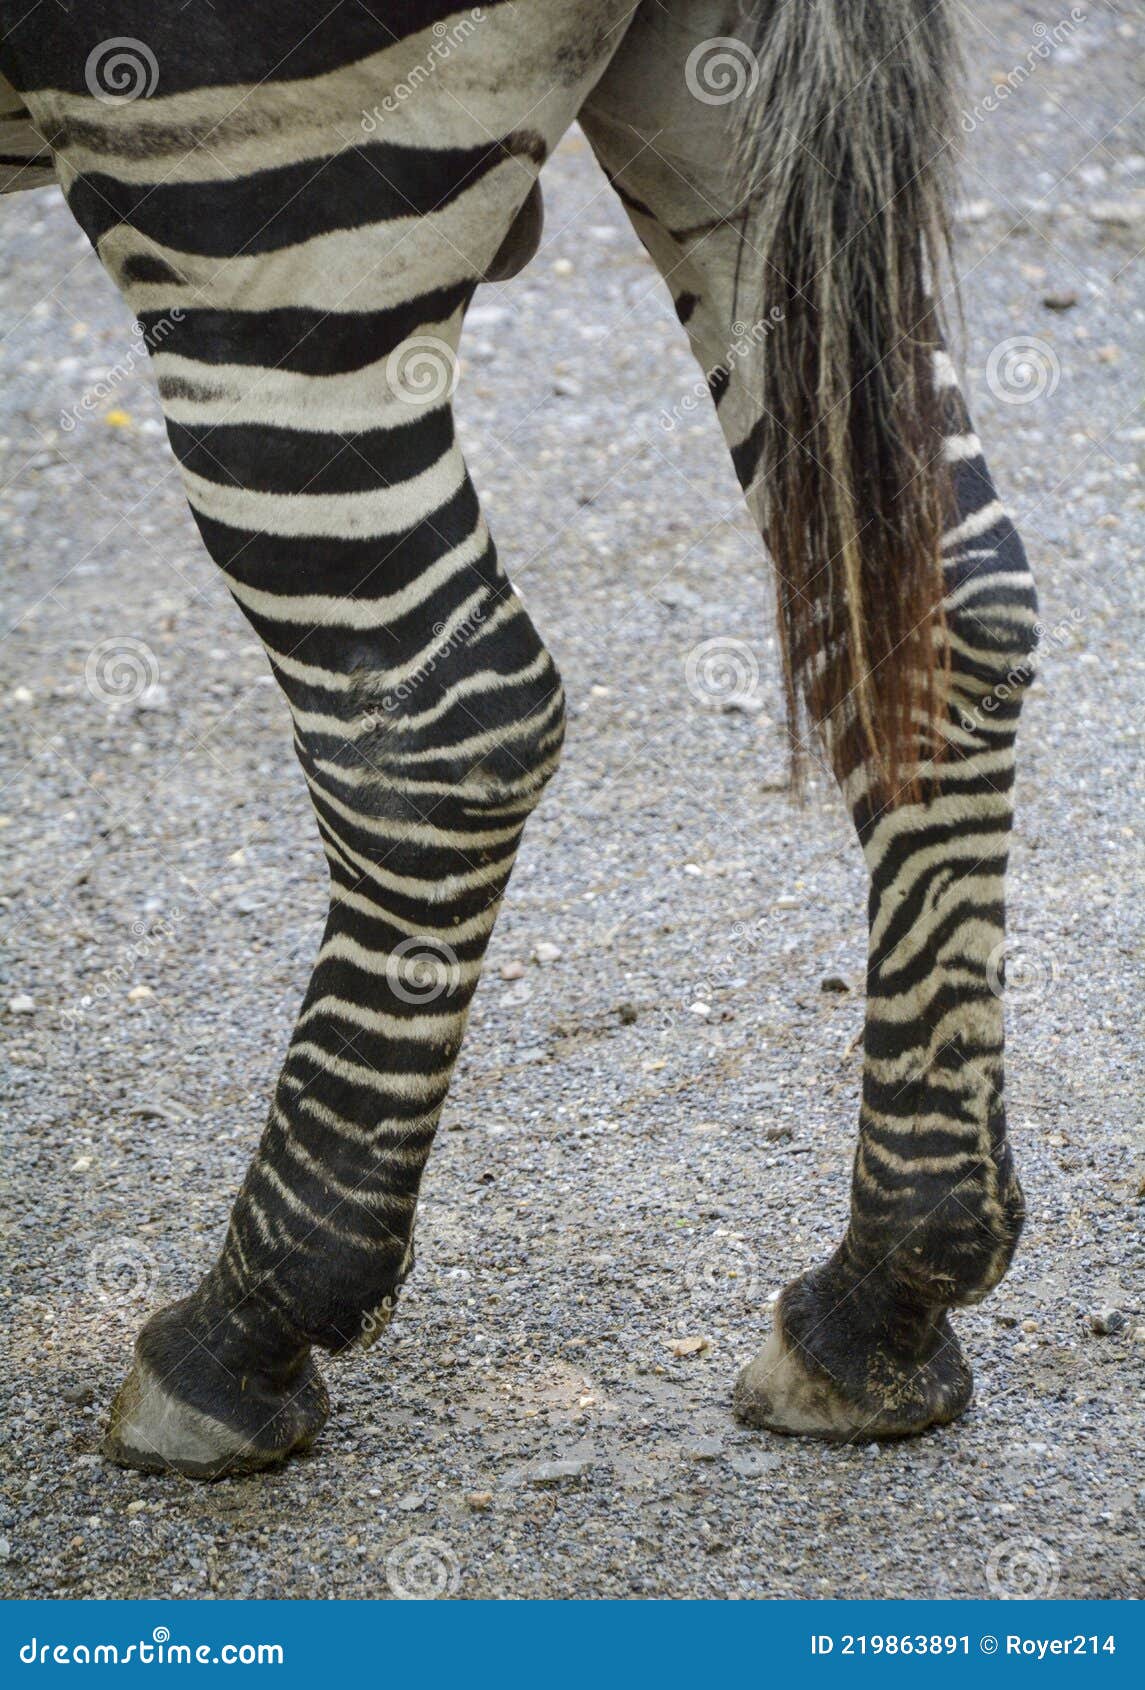 https://thumbs.dreamstime.com/z/close-up-zebra-s-legs-zebra-legs-219863891.jpg